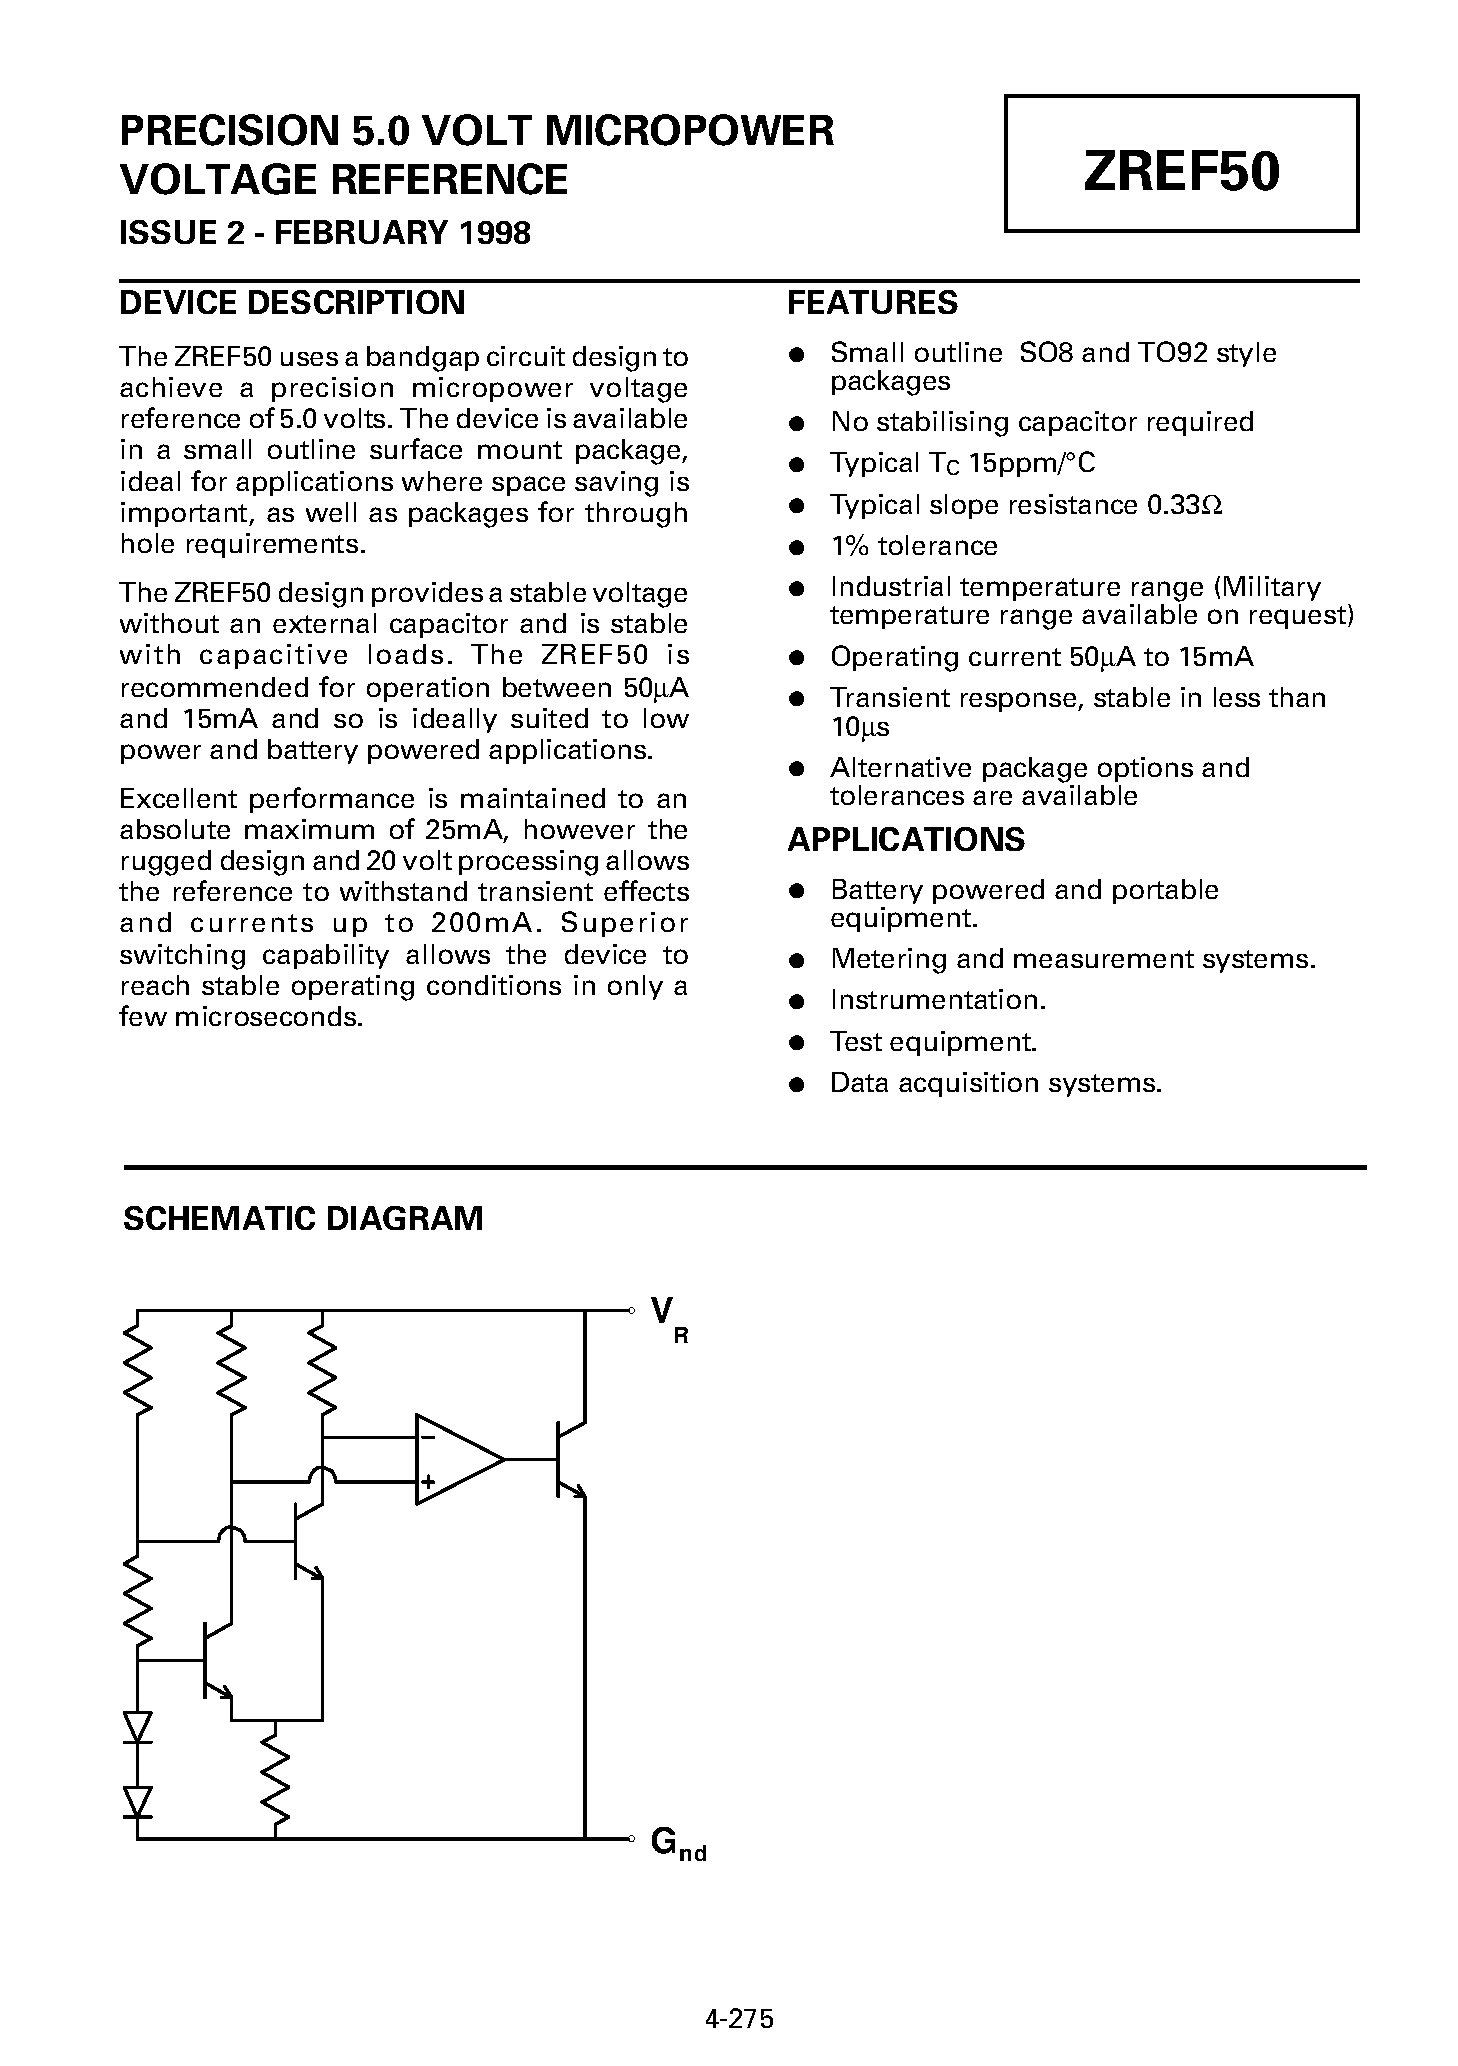 Datasheet ZREF50 - PRECISION 5.0 VOLT MICROPOWER VOLTAGE REFERENCE page 1